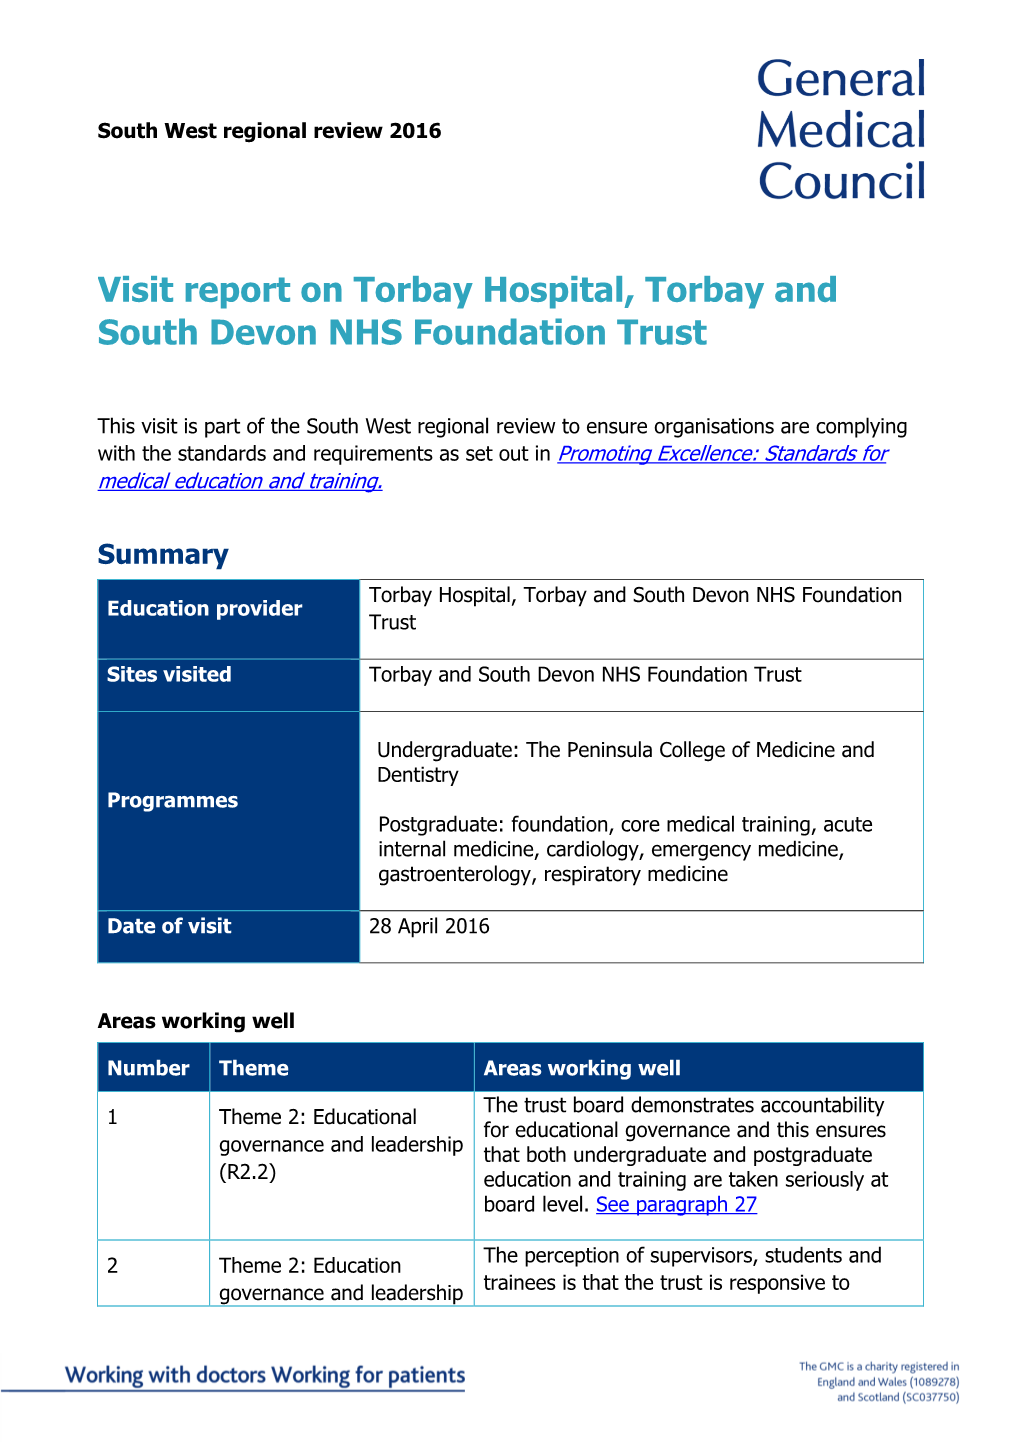 Visit Report on Torbay Hospital, Torbay and South Devon NHS Foundation Trust